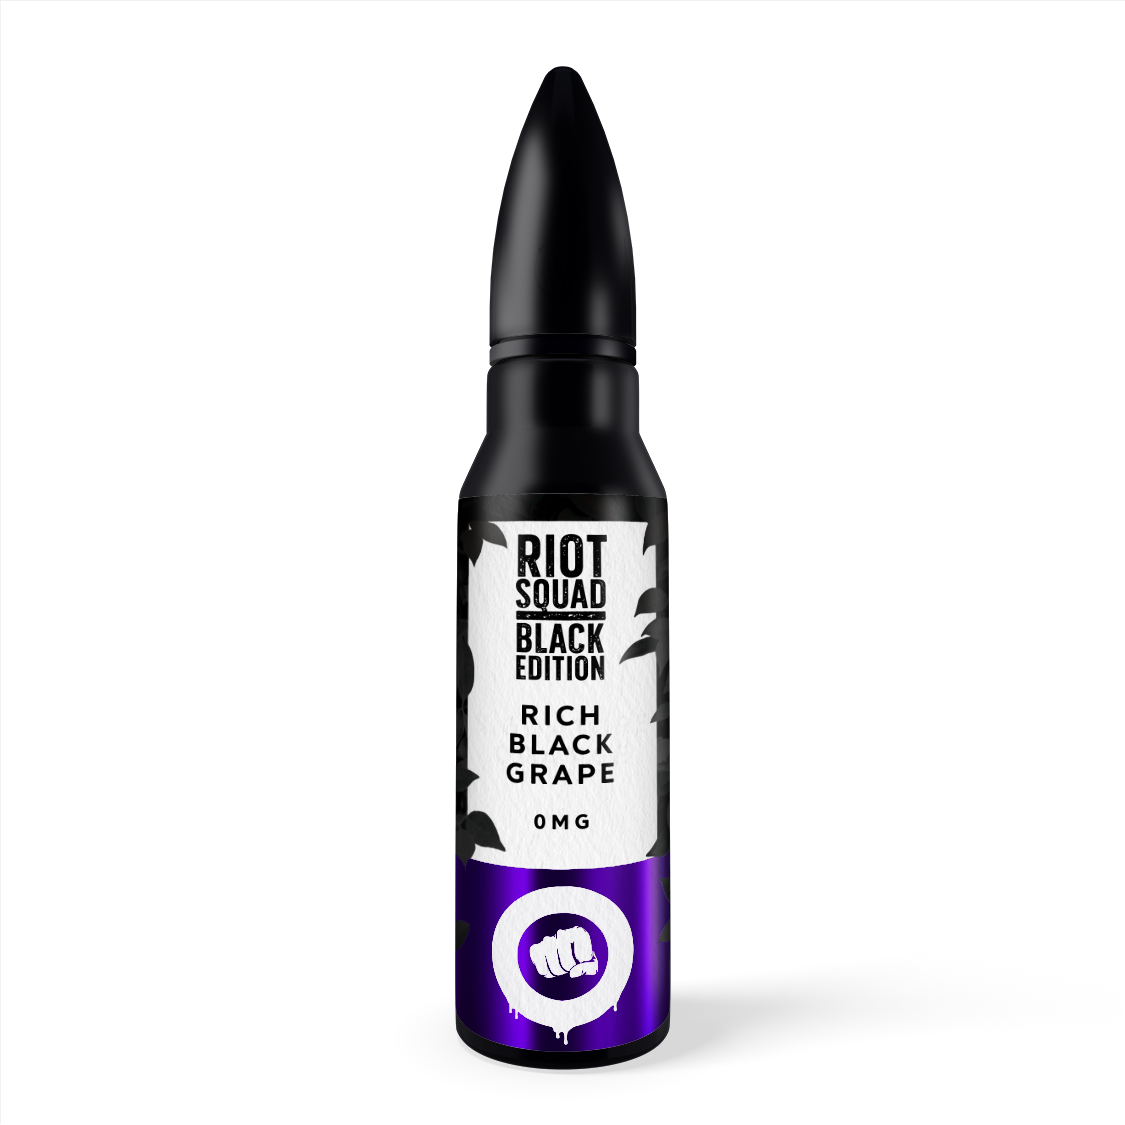 Riot Squad Black Edition - Rich Black Grape 50ml (Clearance) - The Ace Of Vapez